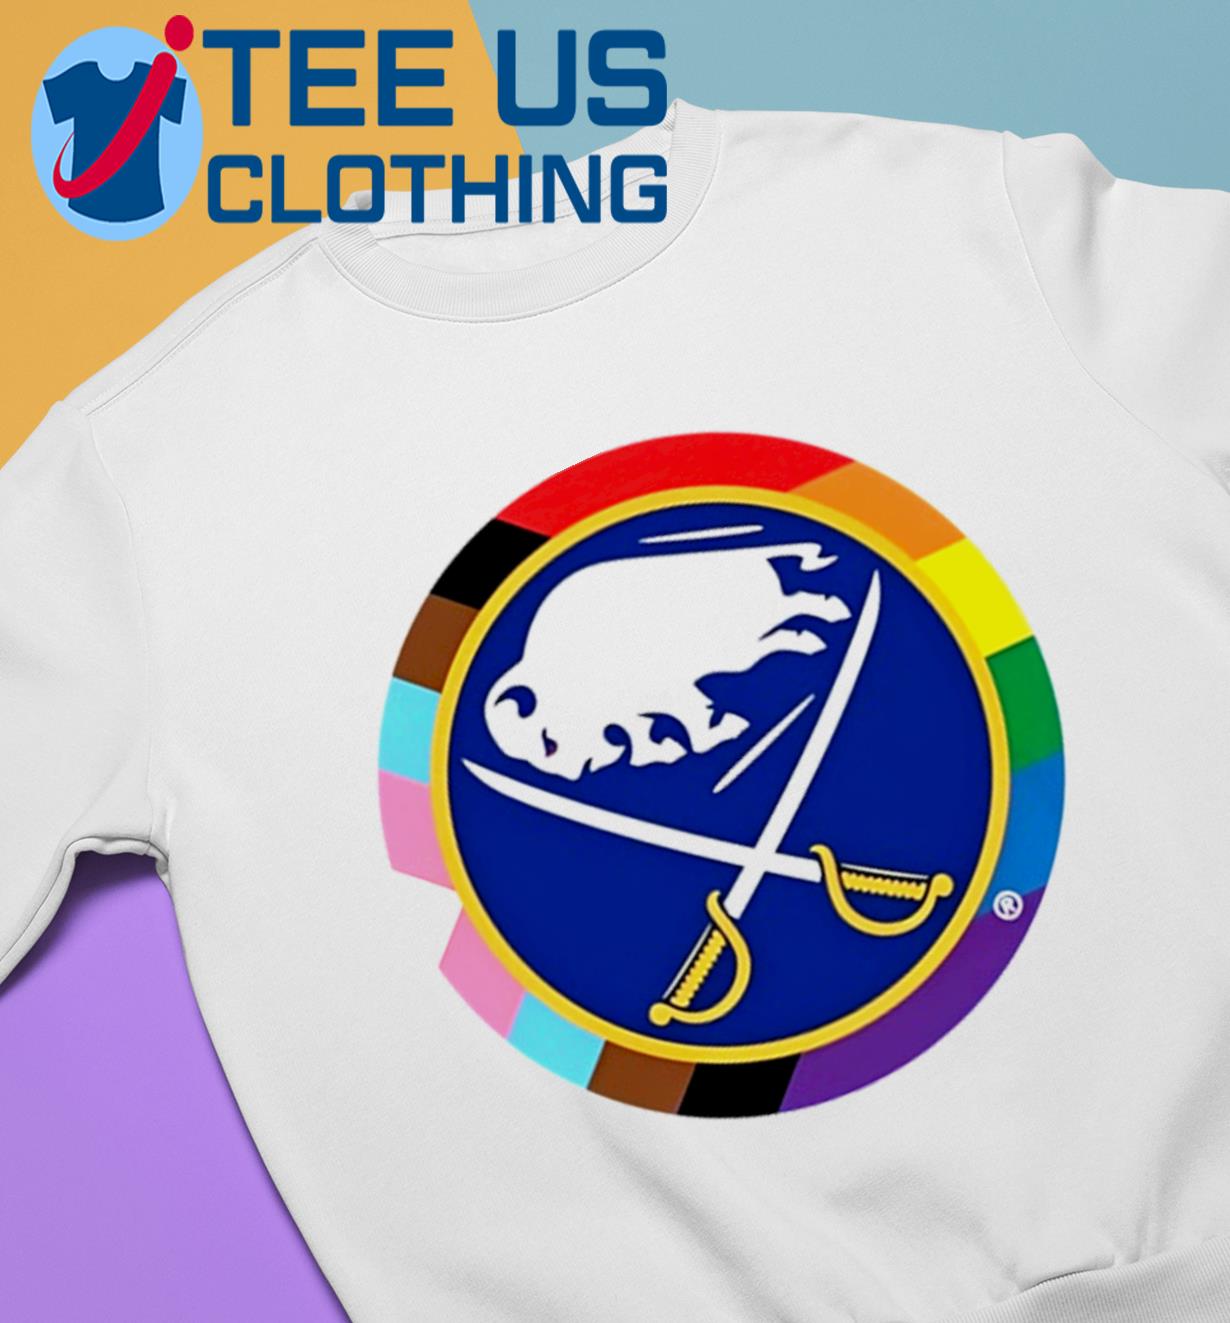 Pride buffalo sabres logo shirt, hoodie, sweater, long sleeve and tank top